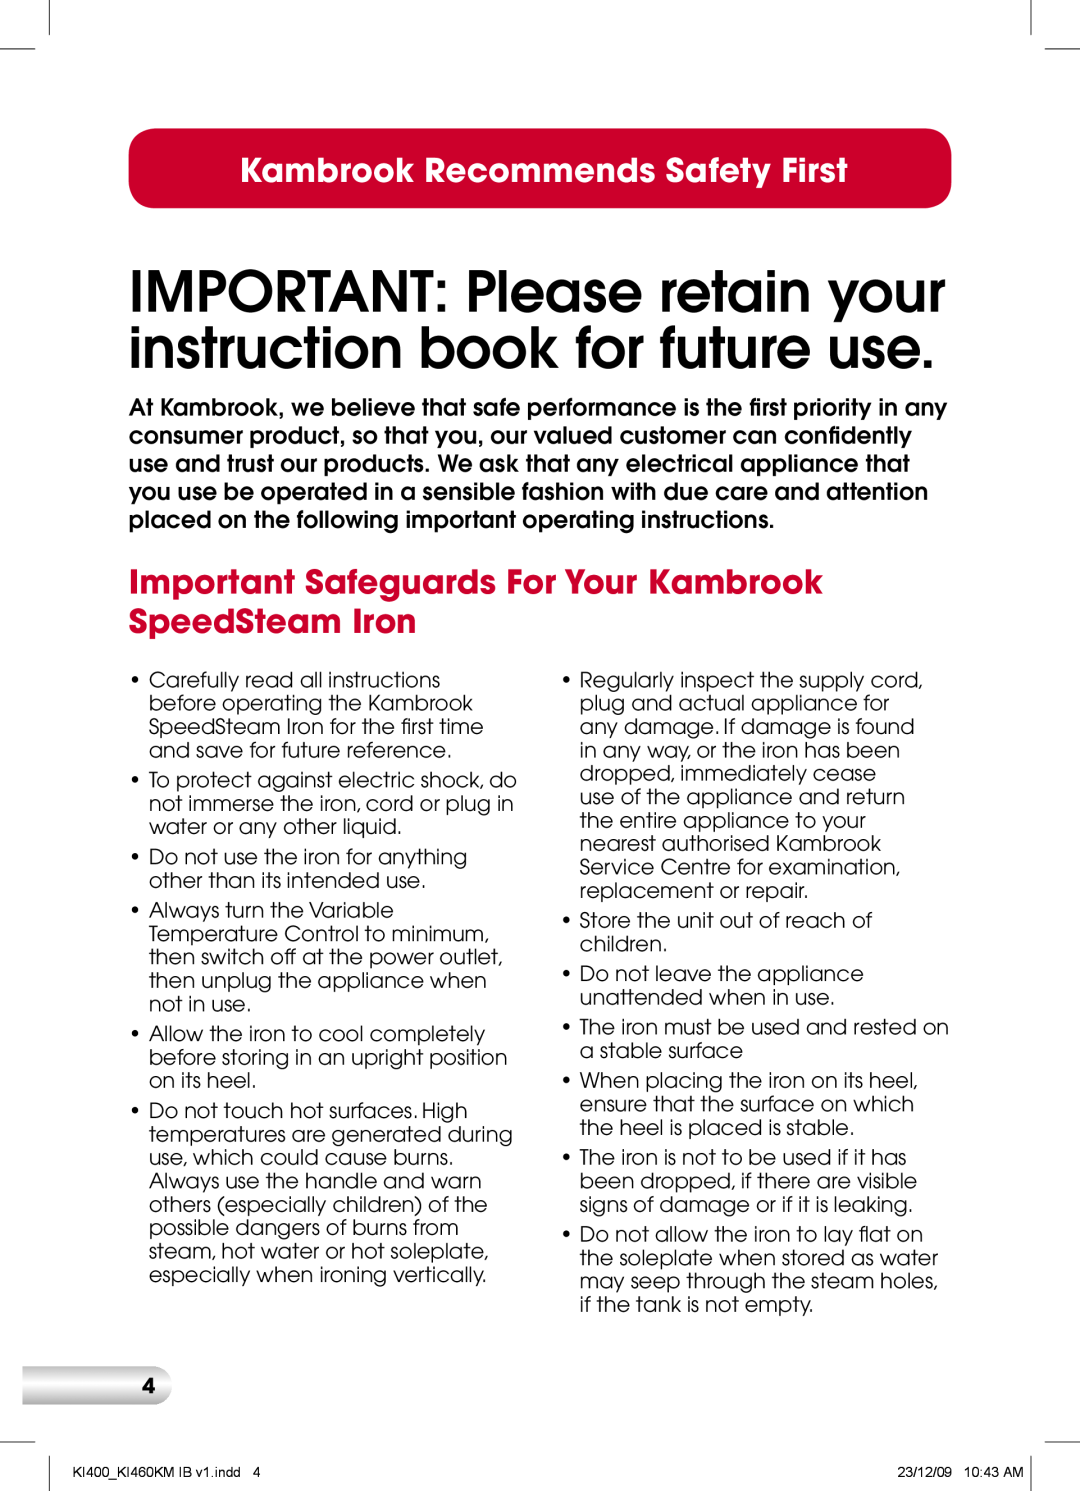 Kambrook KI460KM, KI400 manual Important Safeguards For Your Kambrook SpeedSteam Iron, Kambrook Recommends Safety First 